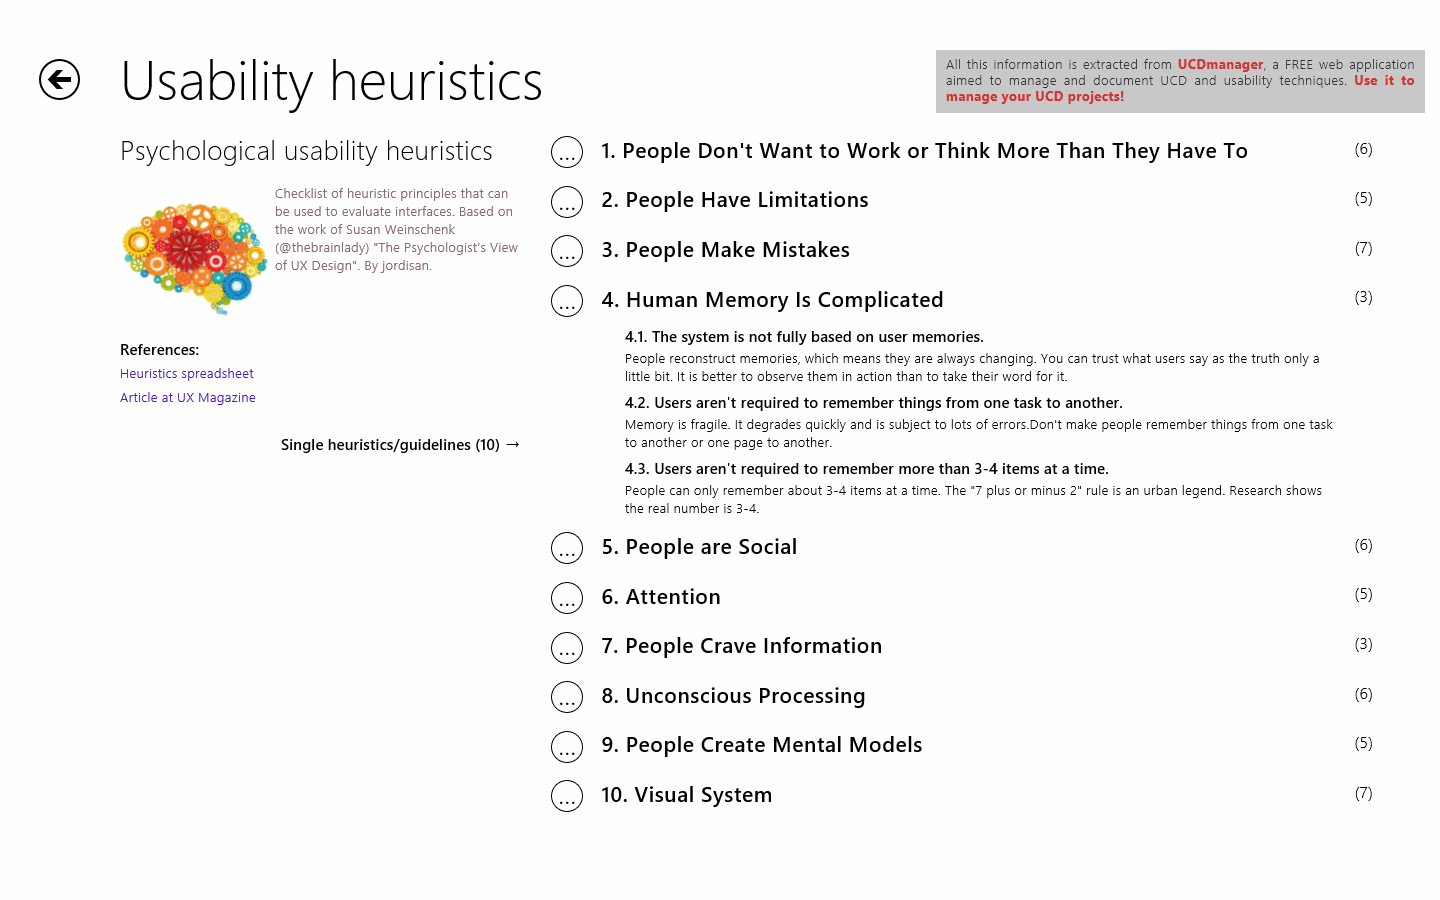 Detail of heuristics (psychological usability heuristics)